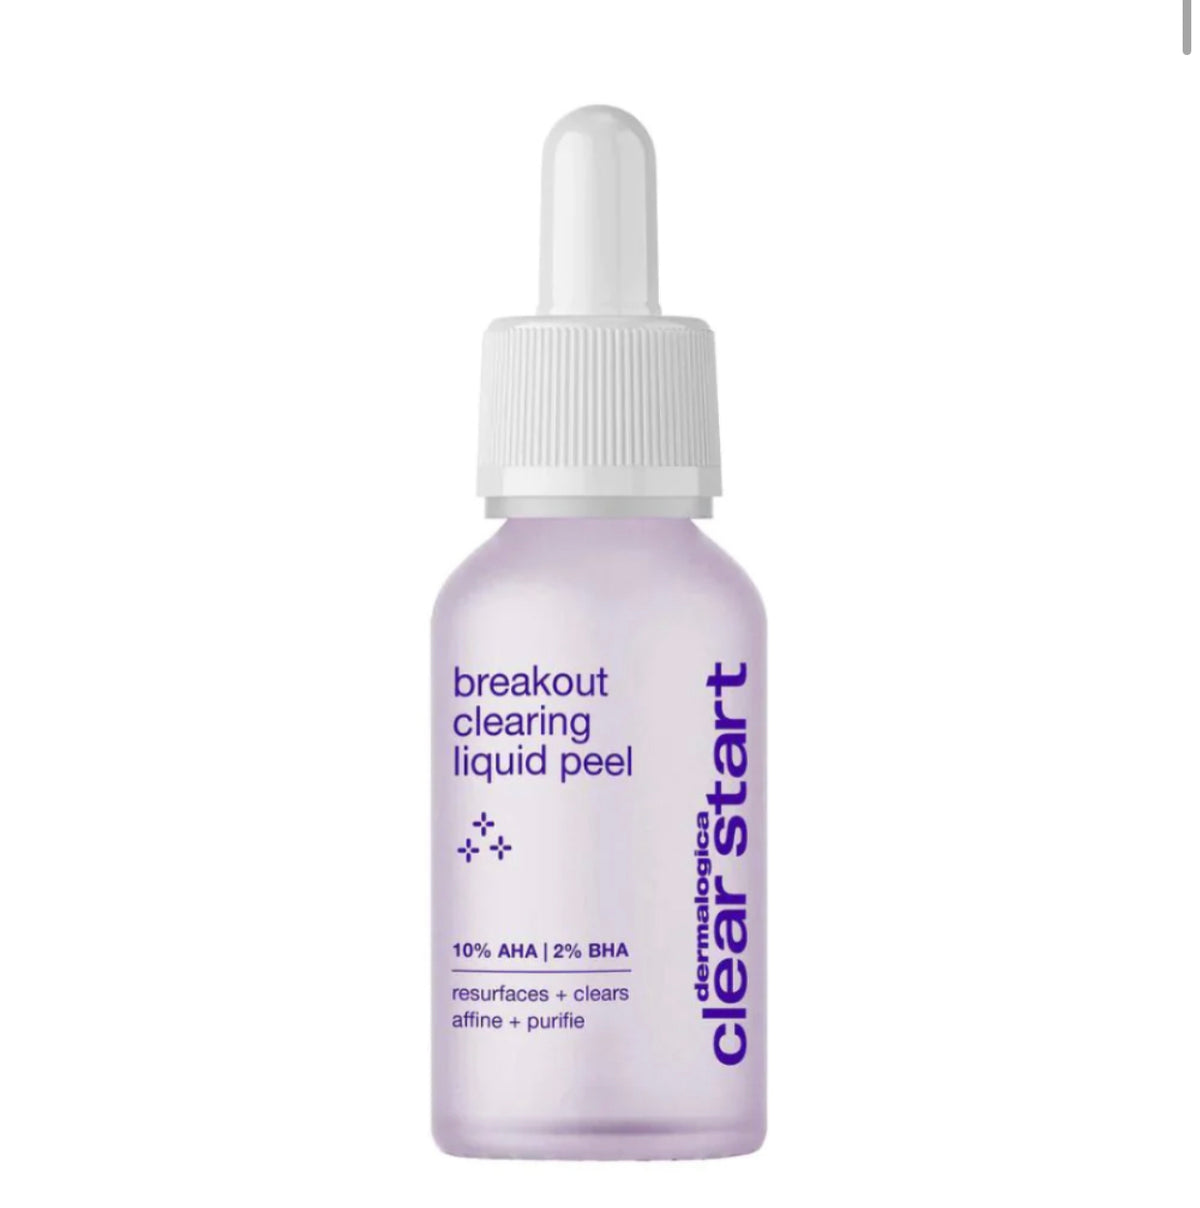 Serum | Breakout Clearing Liquid Peel Clear Start - Dermalogica